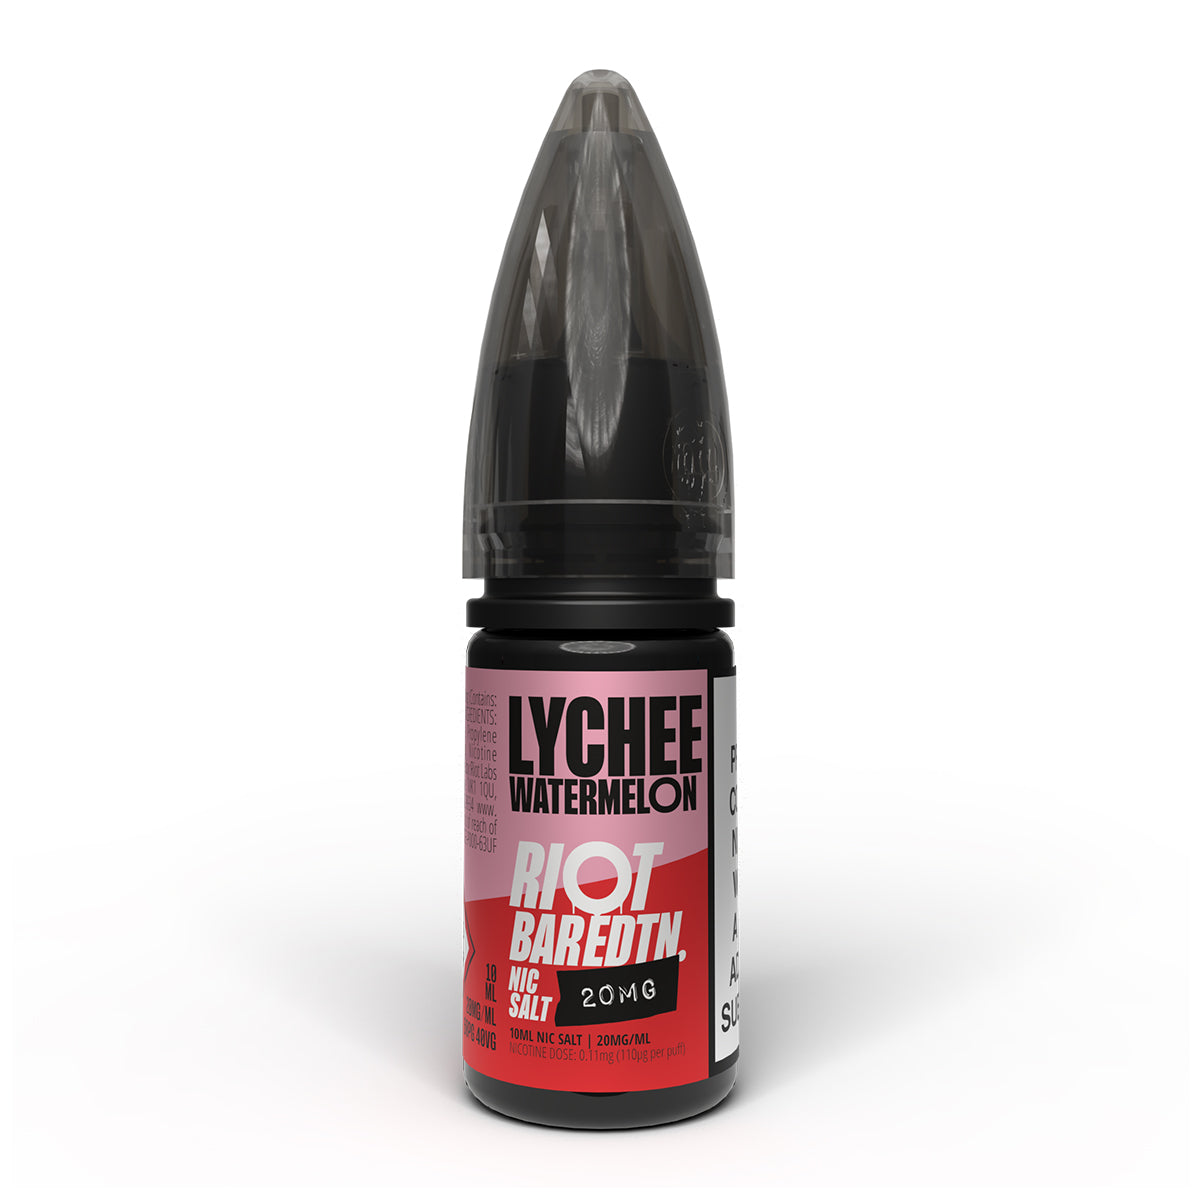 Lychee Watermelon 10ml Nicotine Salt 20mg by Riot Bar Edtn